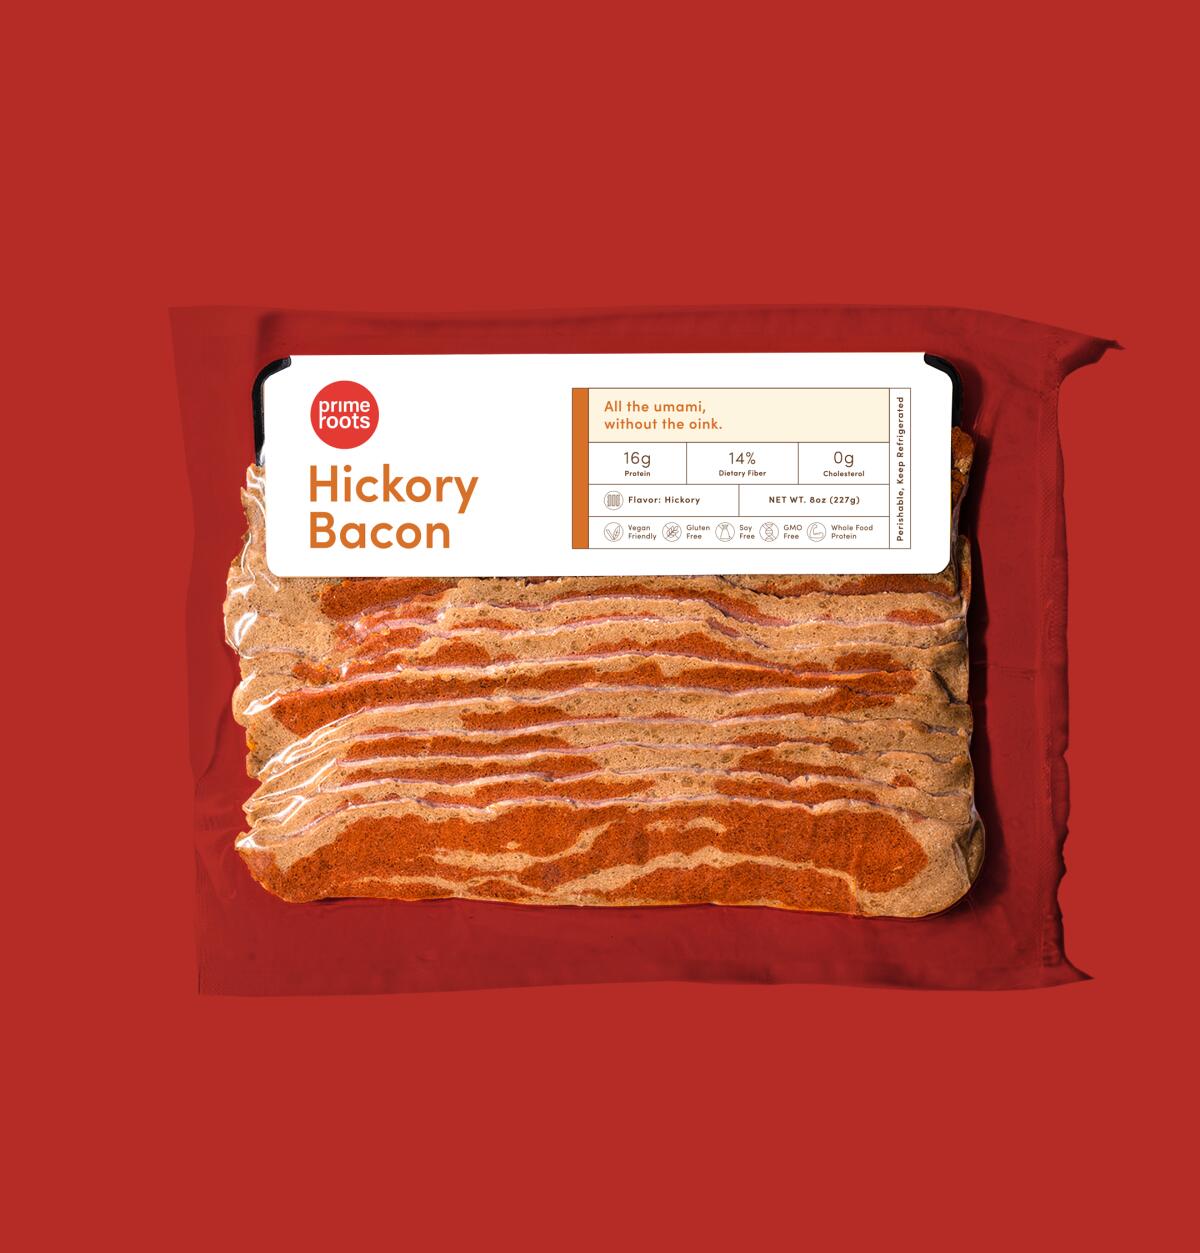 Prime Roots' koji hickory bacon